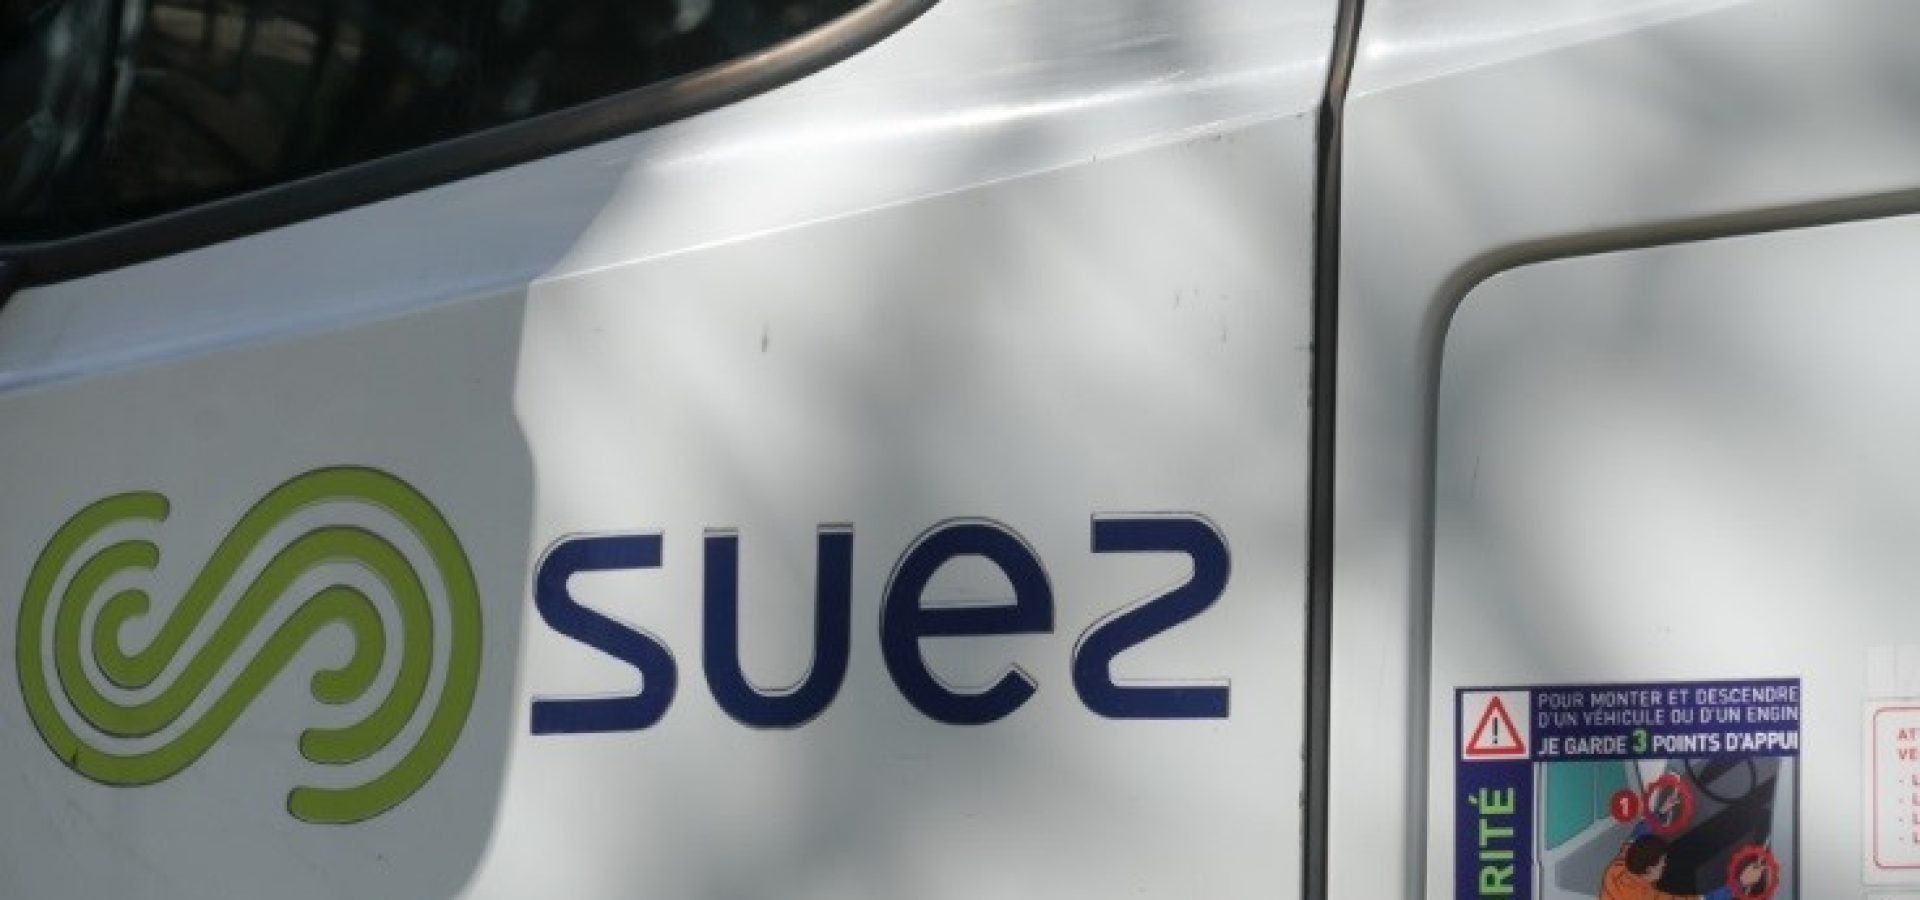 Suez emblem on a vehicle – wibestbroker